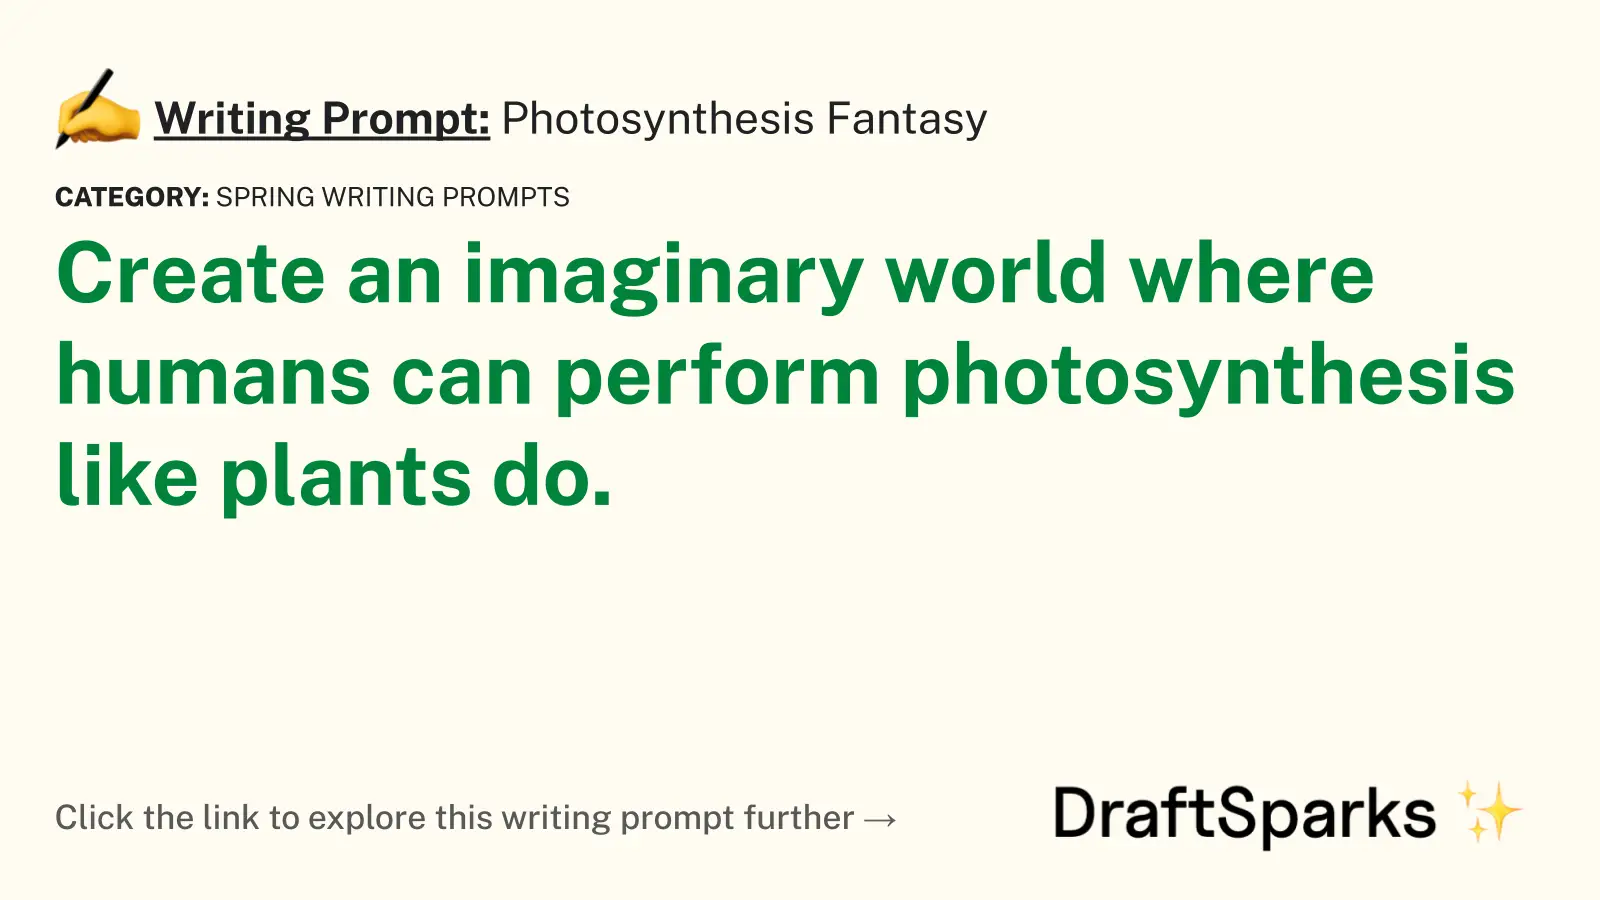 Photosynthesis Fantasy